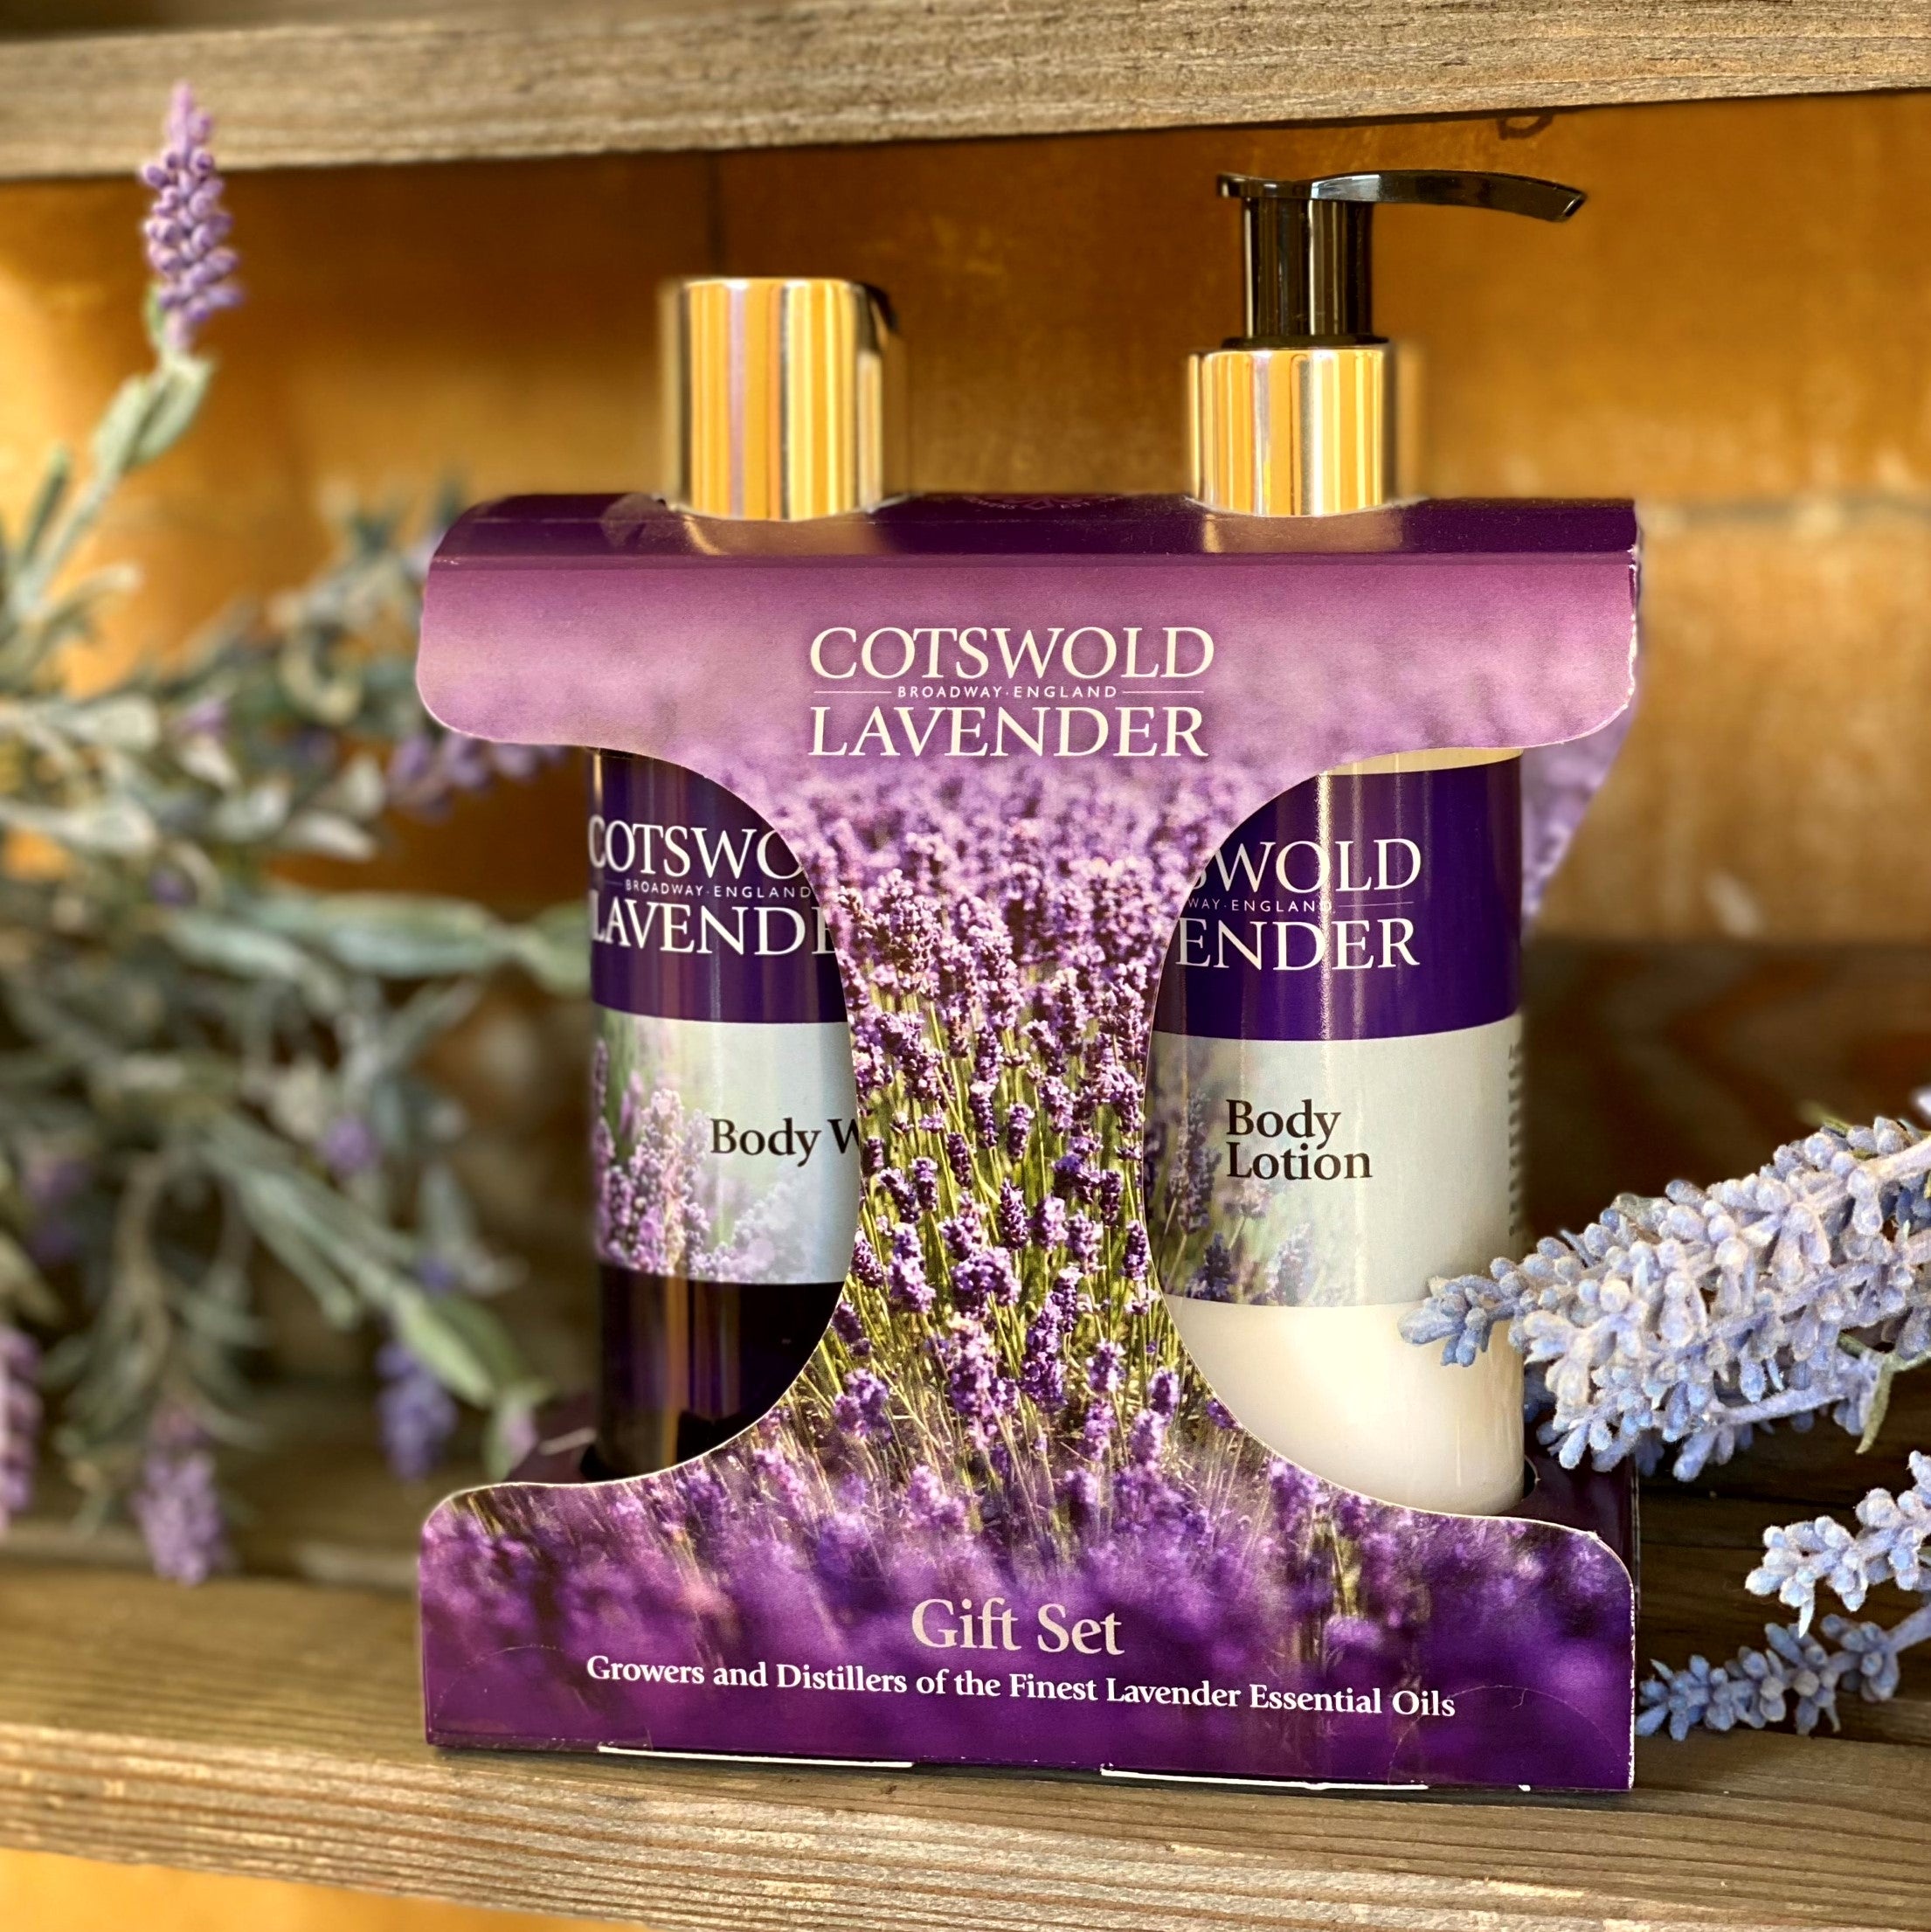 Cotswold Lavender Body Gift Set